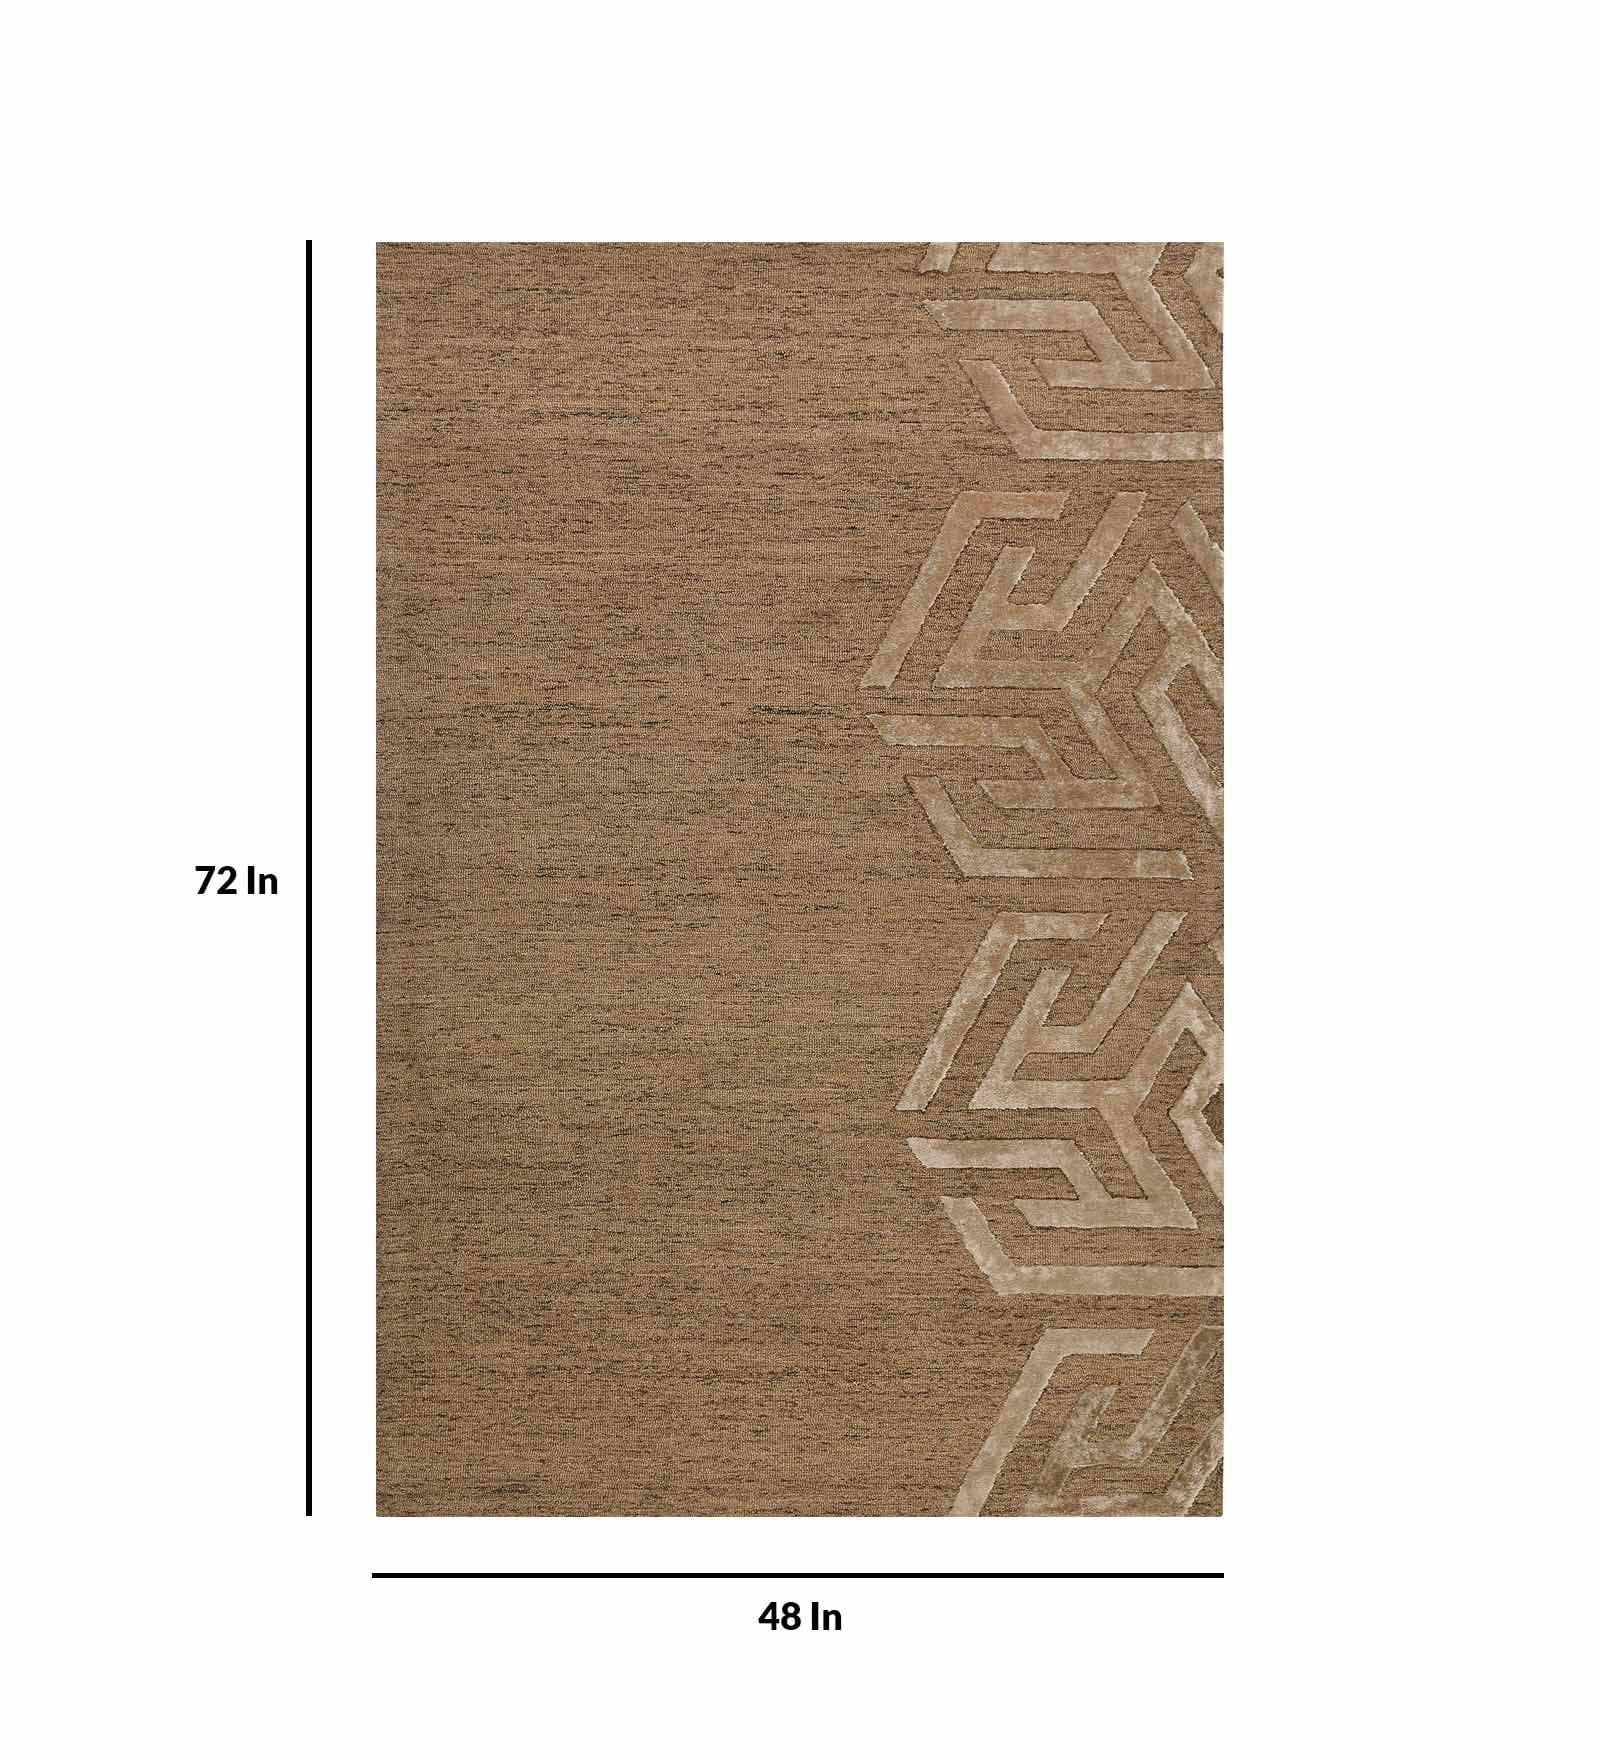 BROWN Wool & Viscose Canyan 4x6 Feet  Hand-Tufted Carpet - Rug